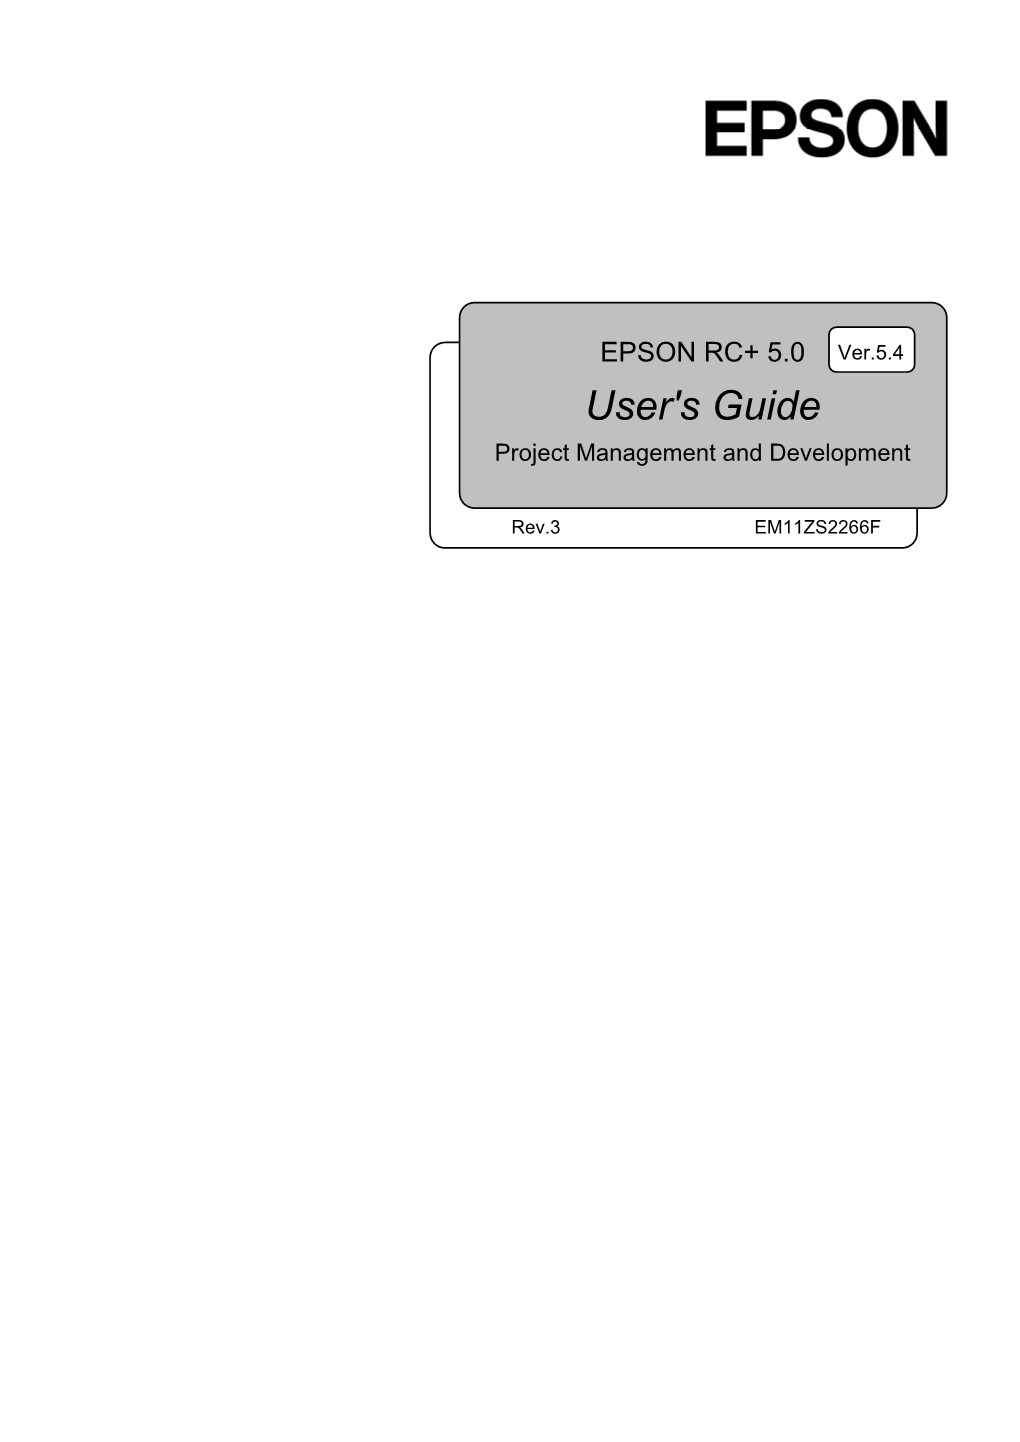 EPSON RC+ 5.0 (Ver.5.4) User's Guide Rev.3 I